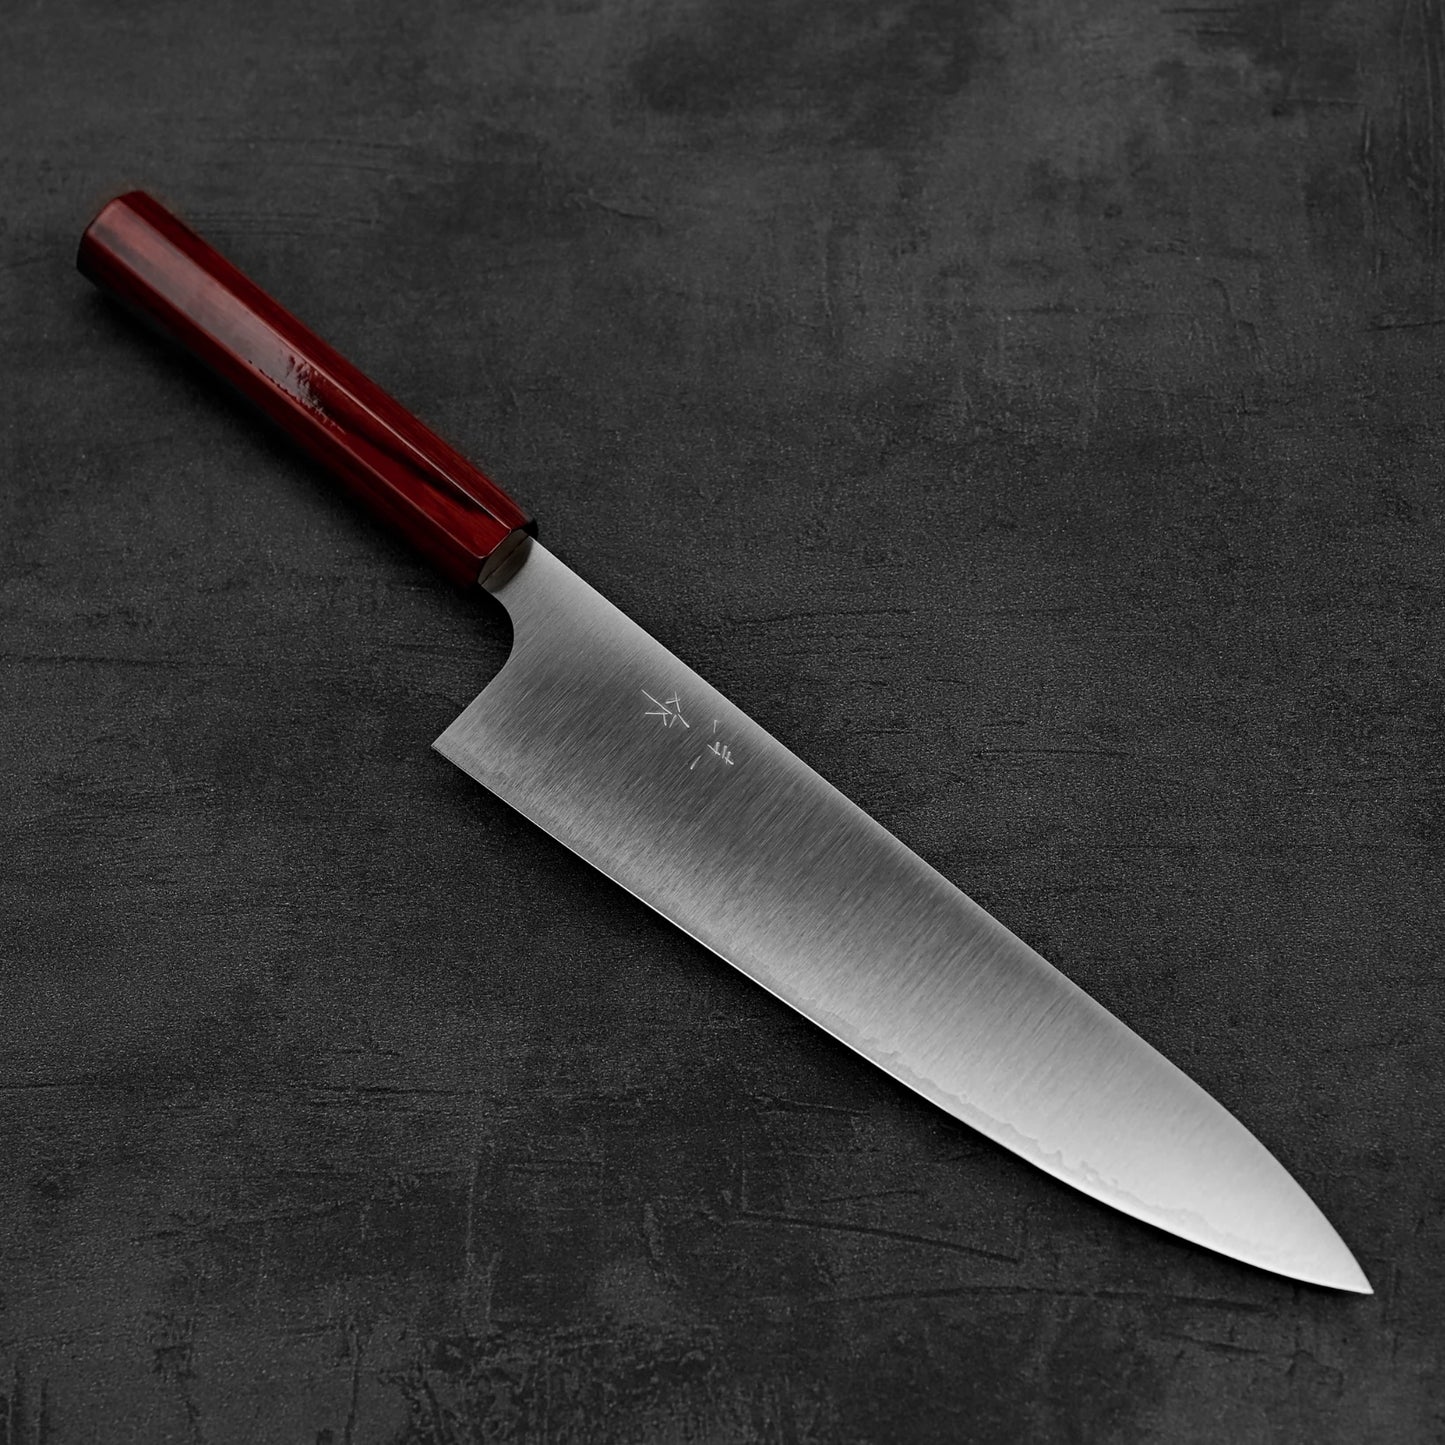 Another top down view of Kei Kobayashi SG2 gyuto knife in diagonal position